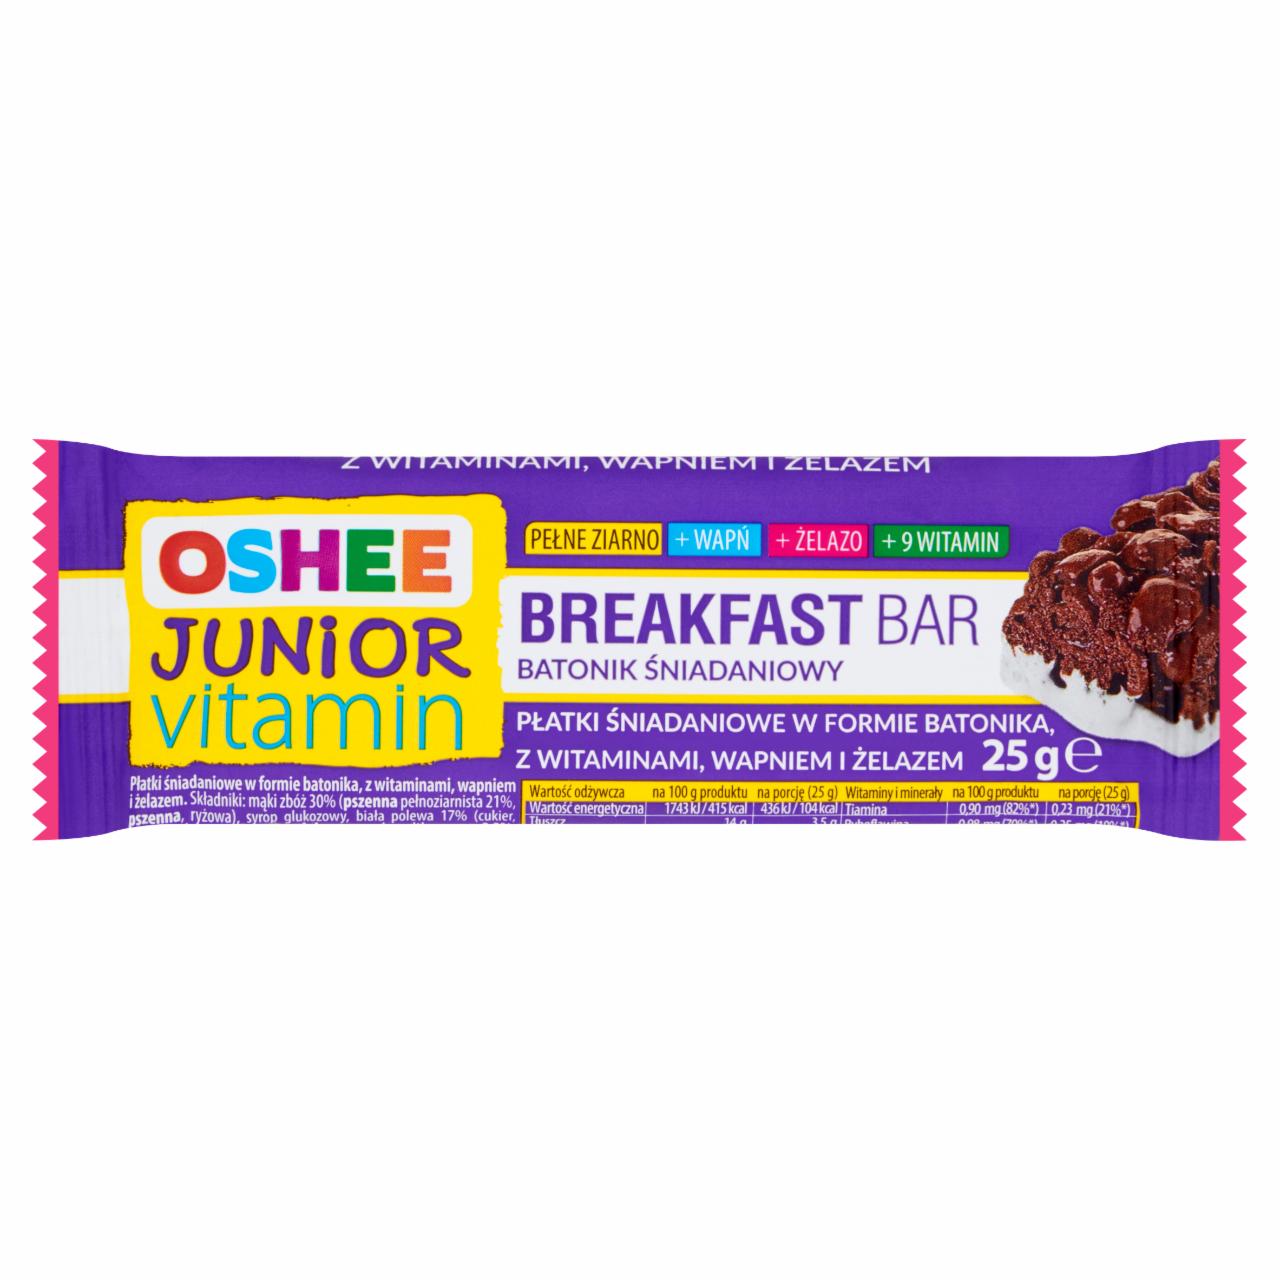 Zdjęcia - Oshee Junior Vitamin Batonik śniadaniowy 25 g